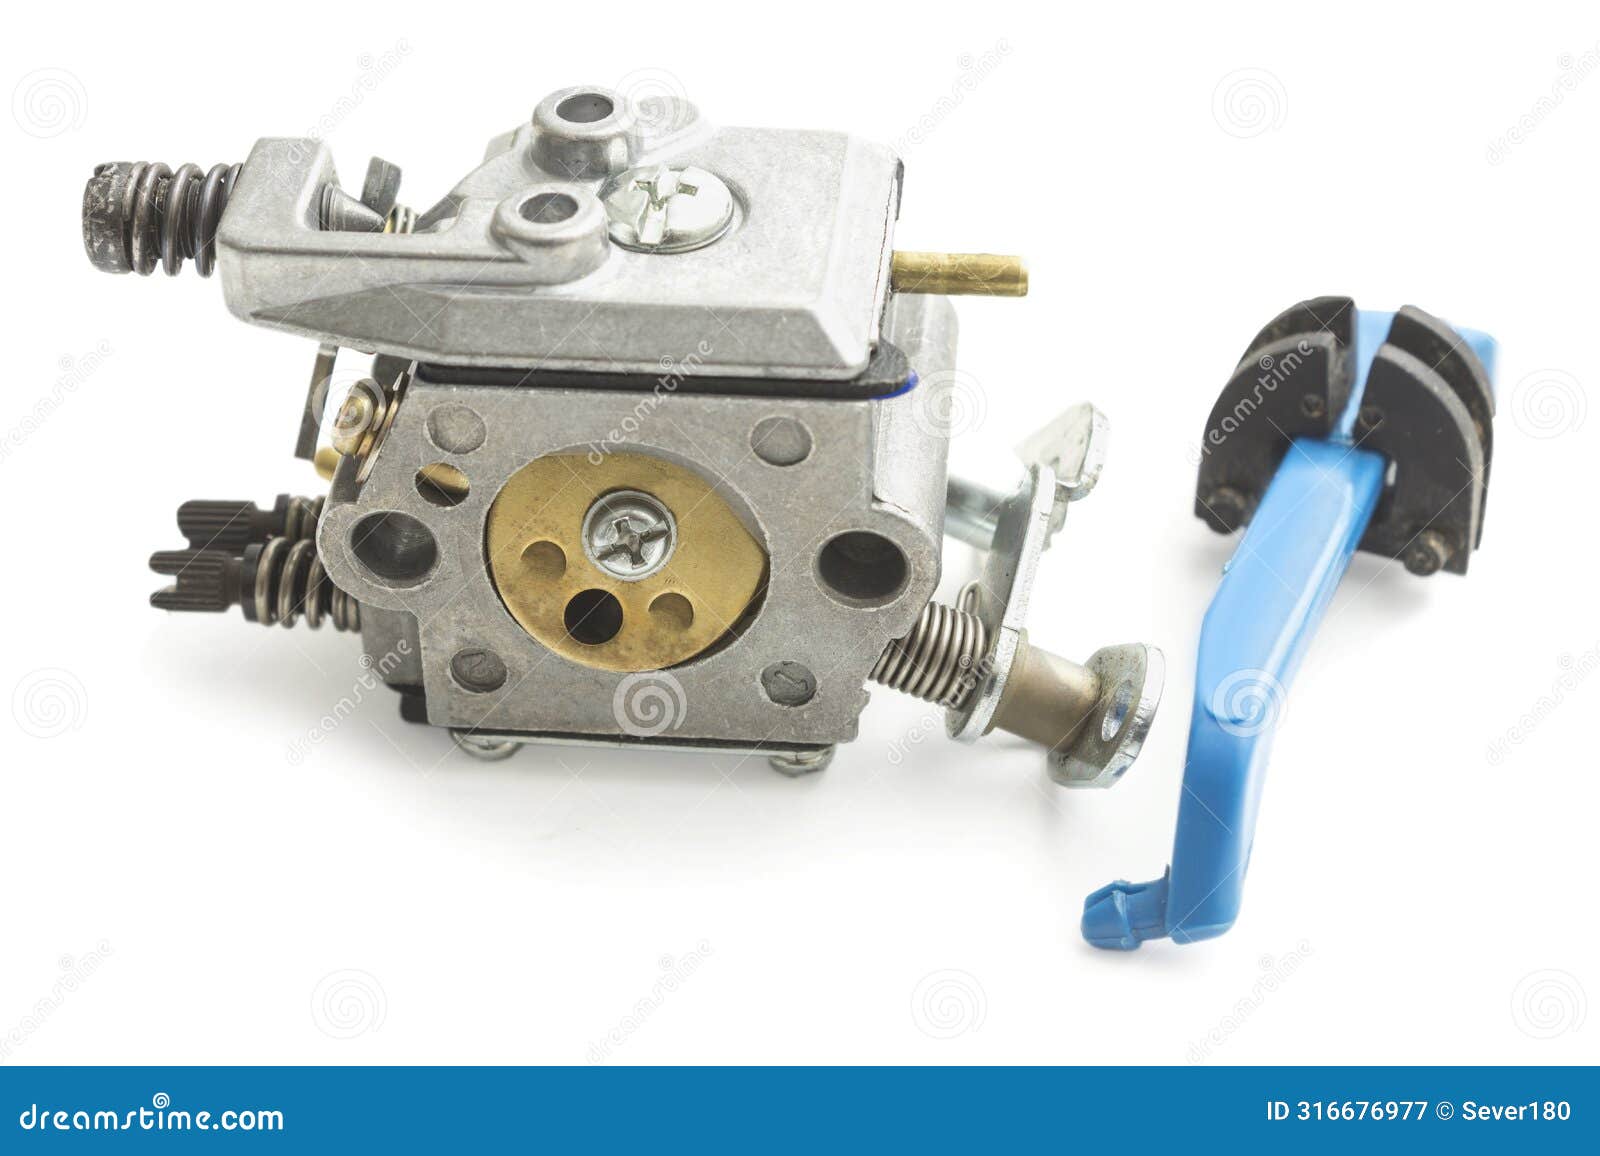 carburetor for a two-stroke engine